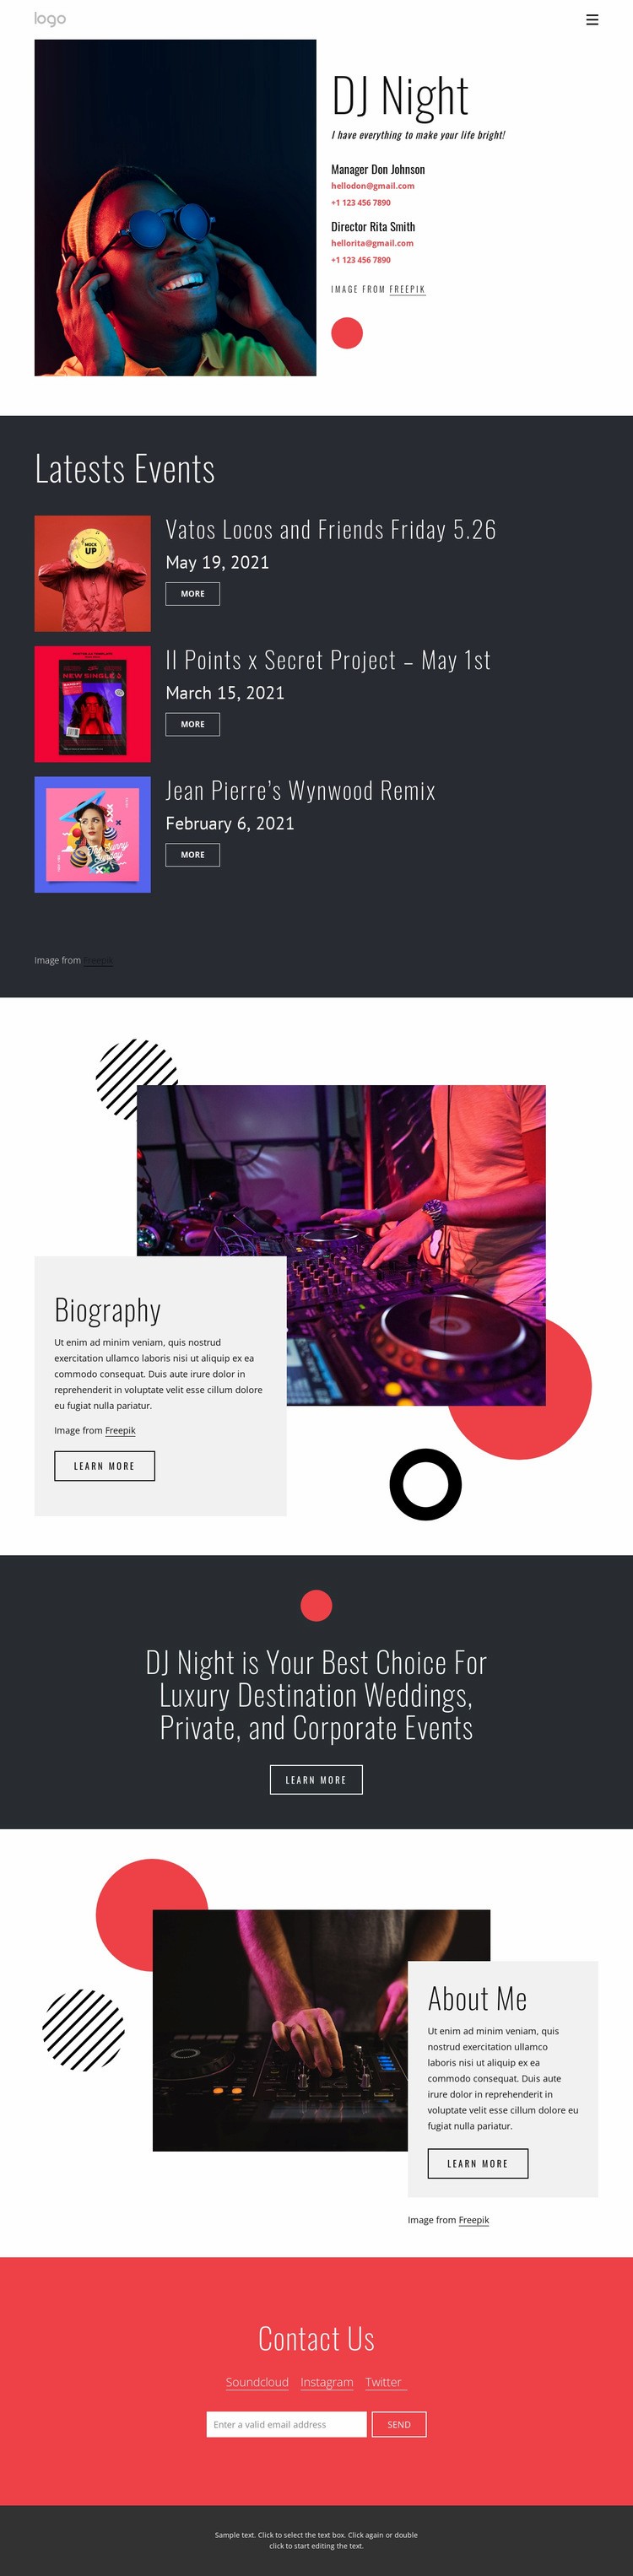 Dj night website Homepage Design